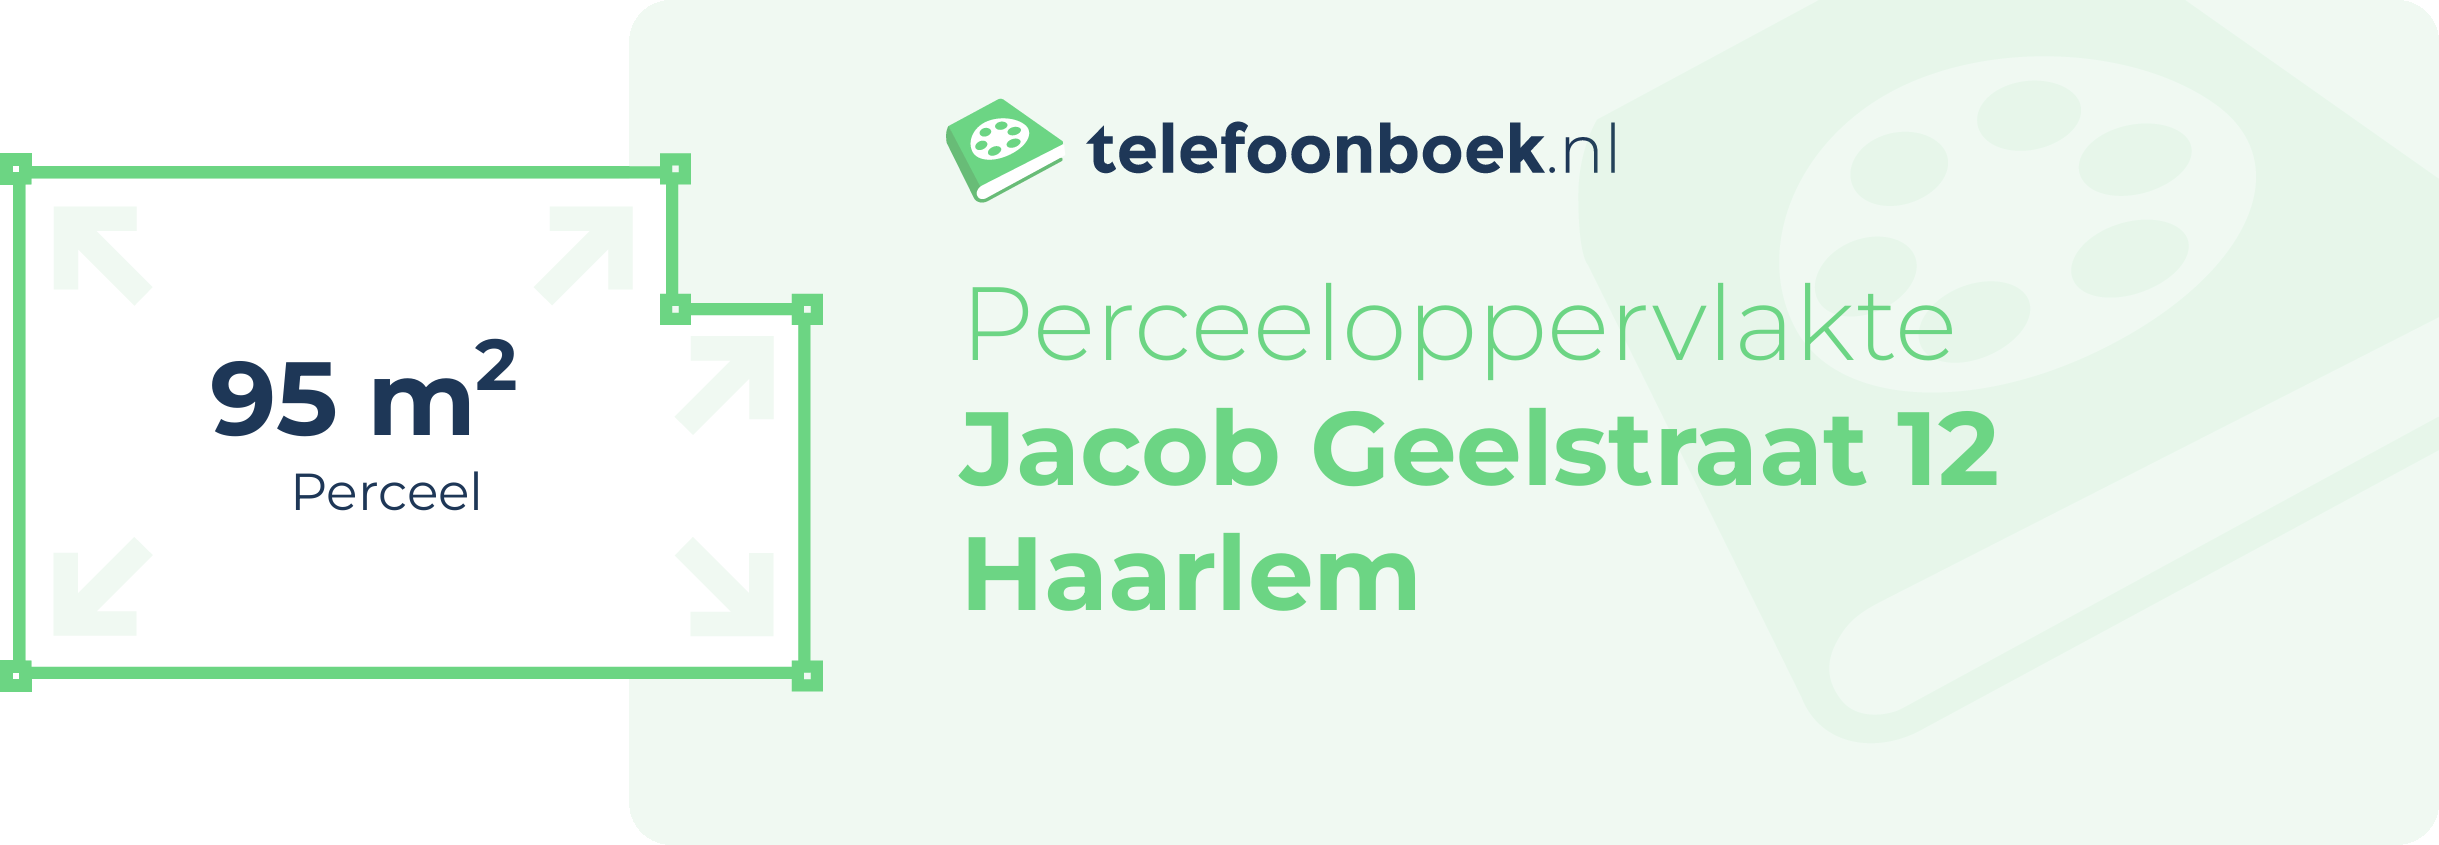 Perceeloppervlakte Jacob Geelstraat 12 Haarlem